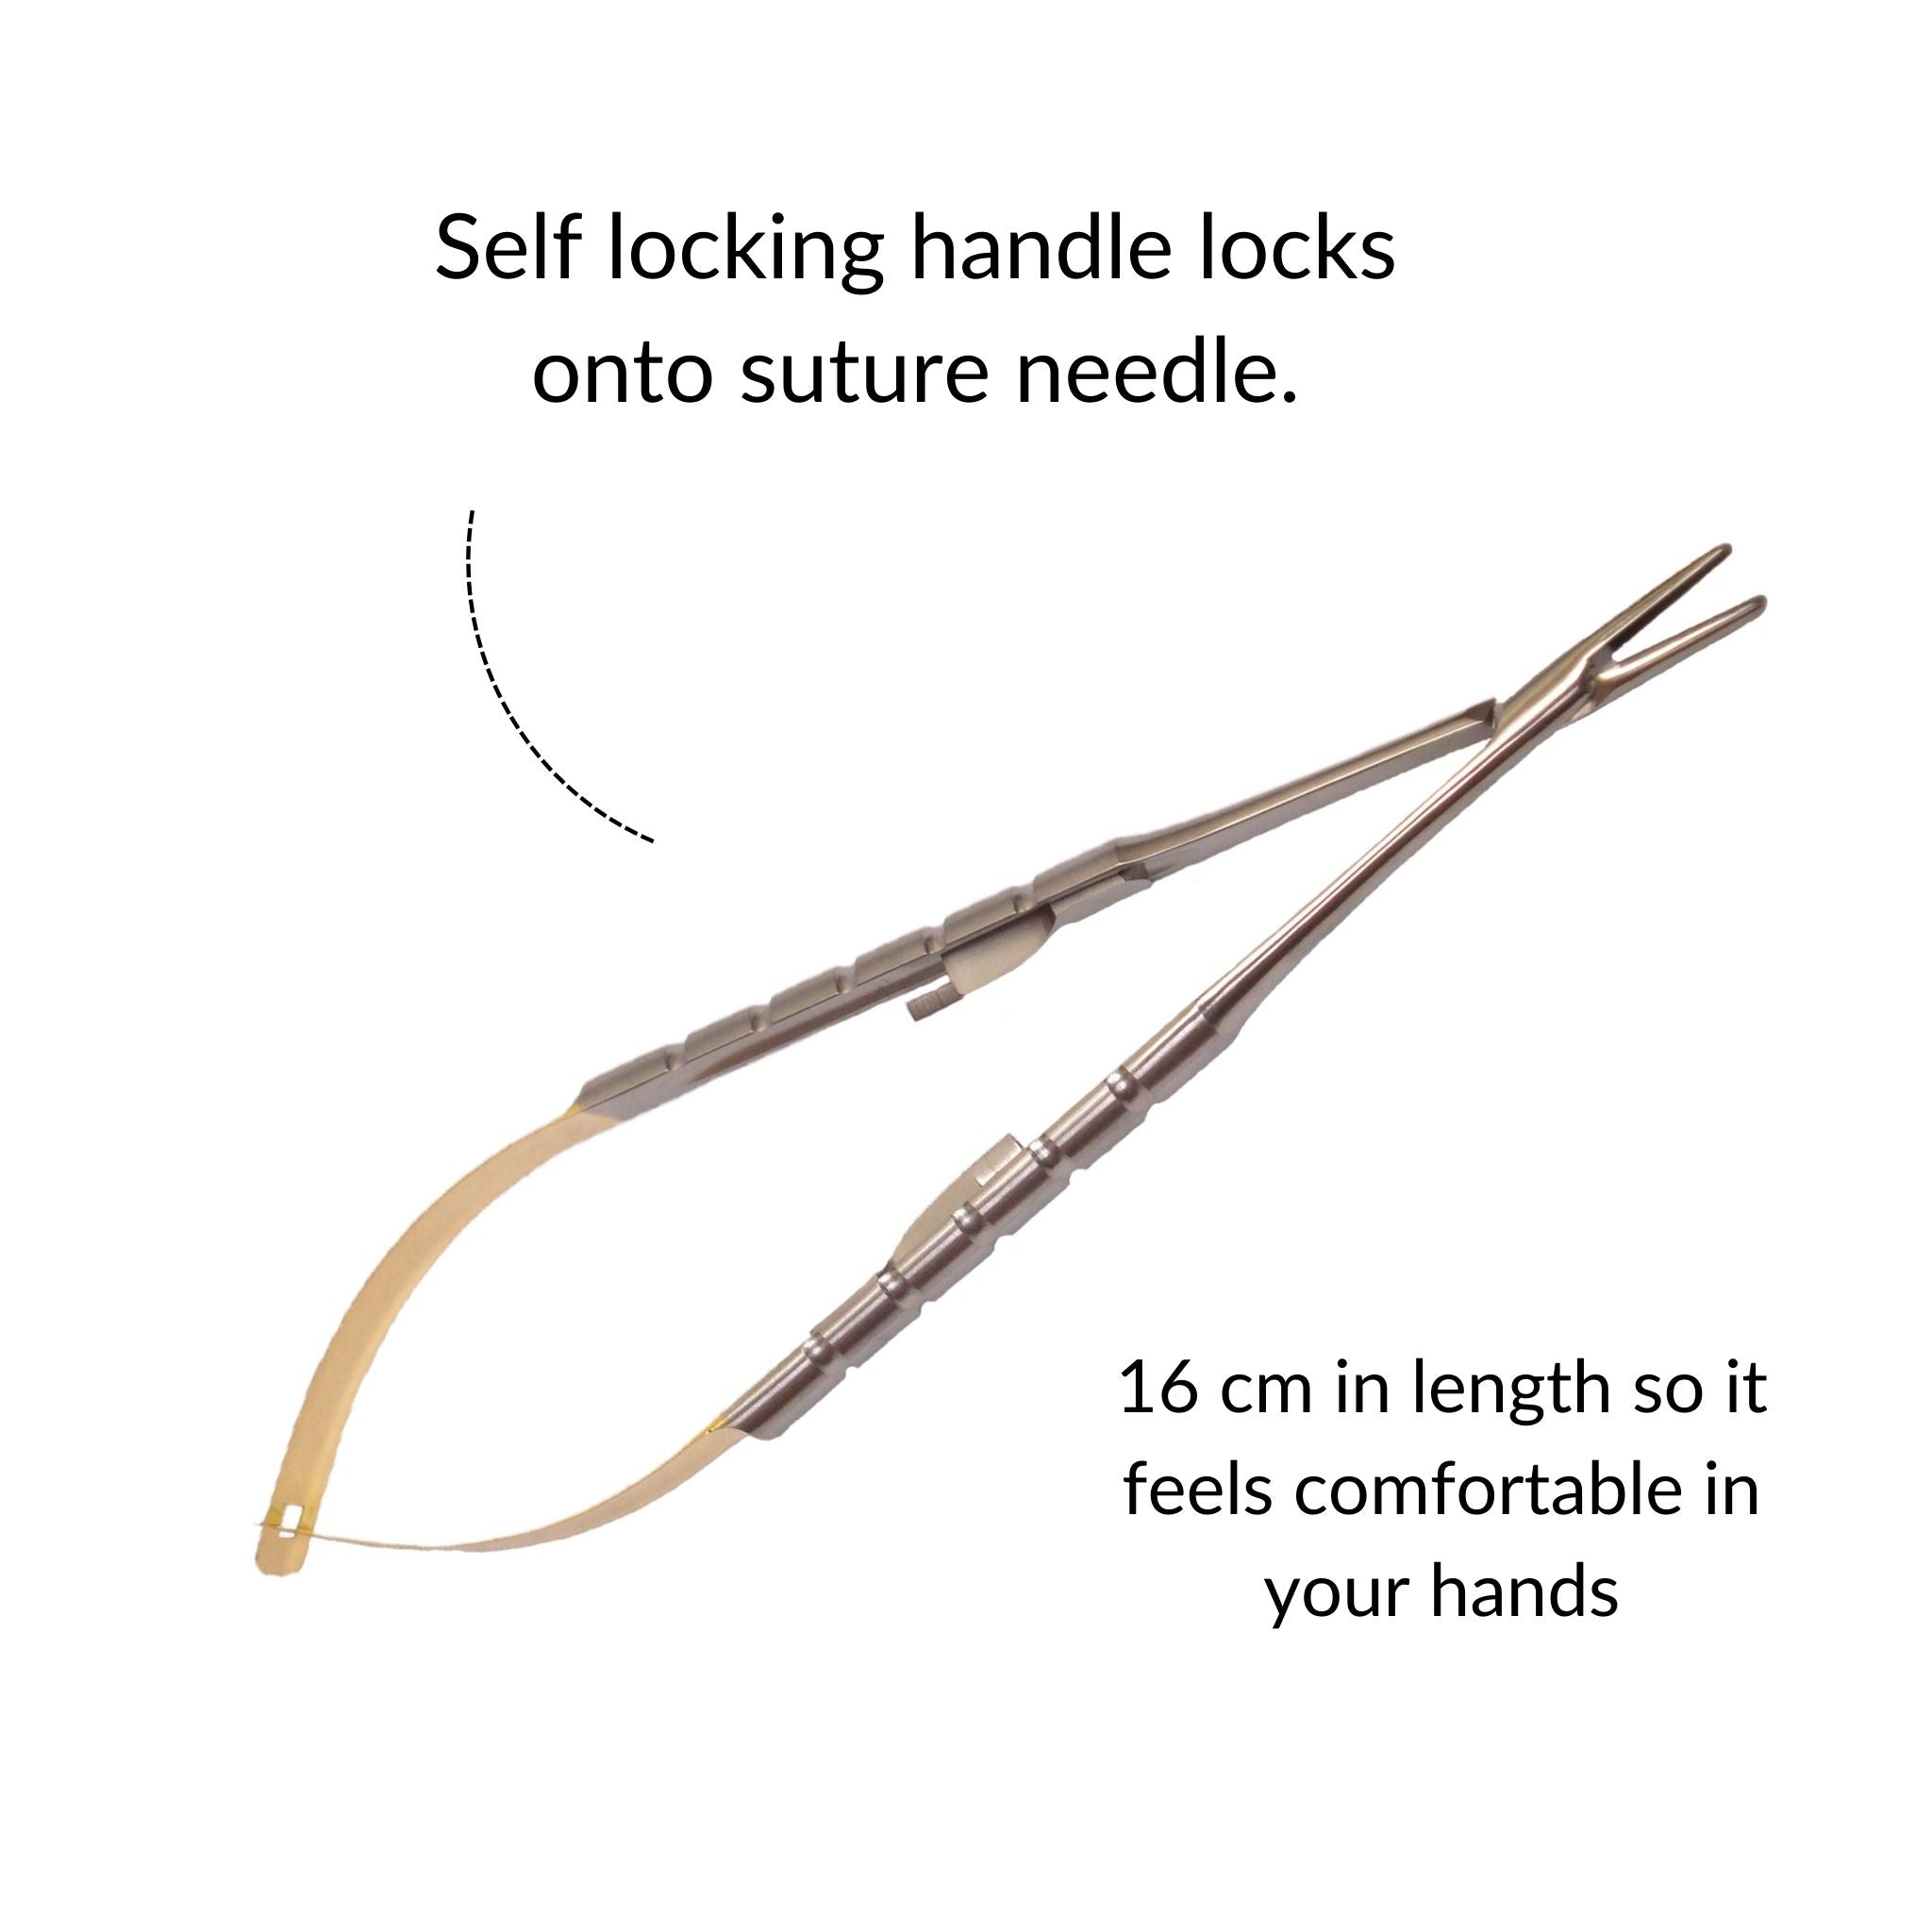 CastroV™ needle holder